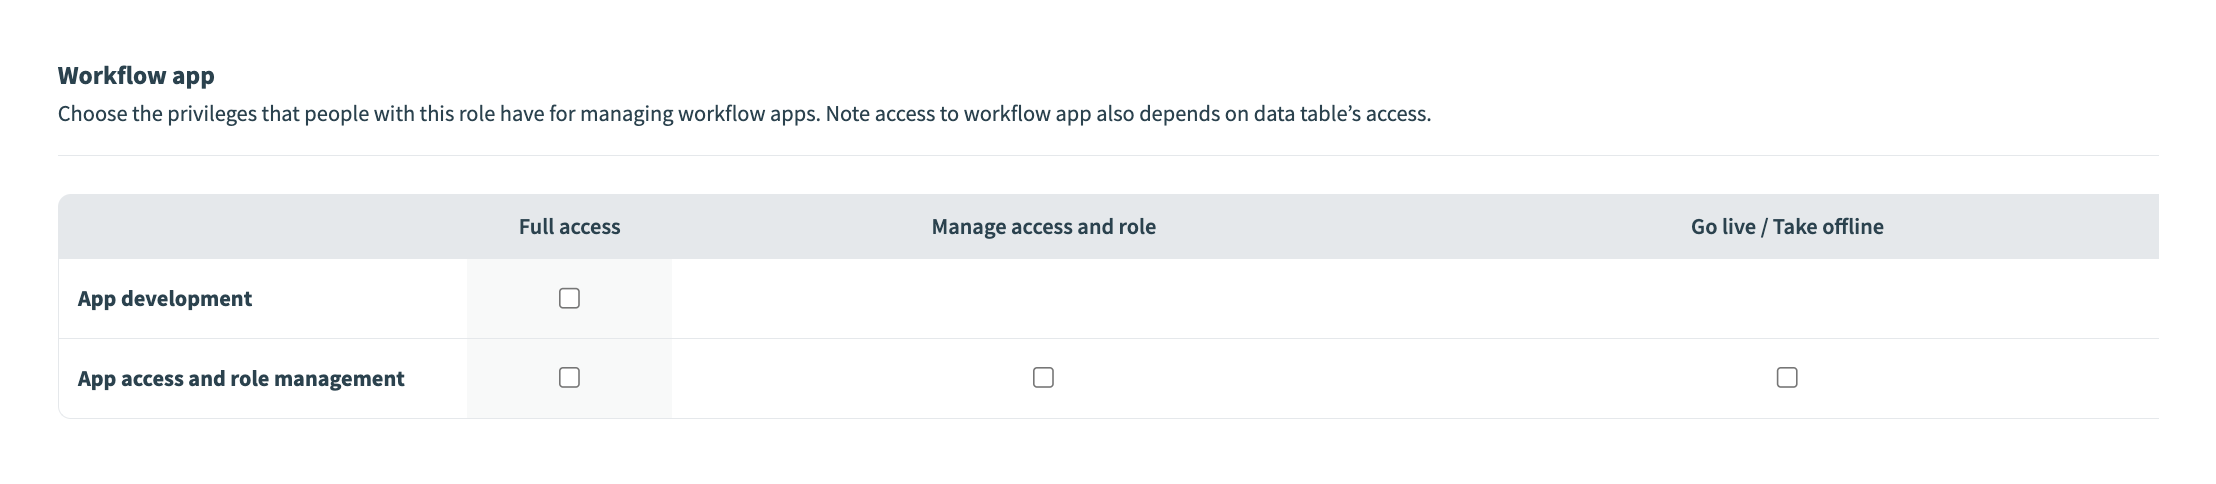 Workflow app permissions